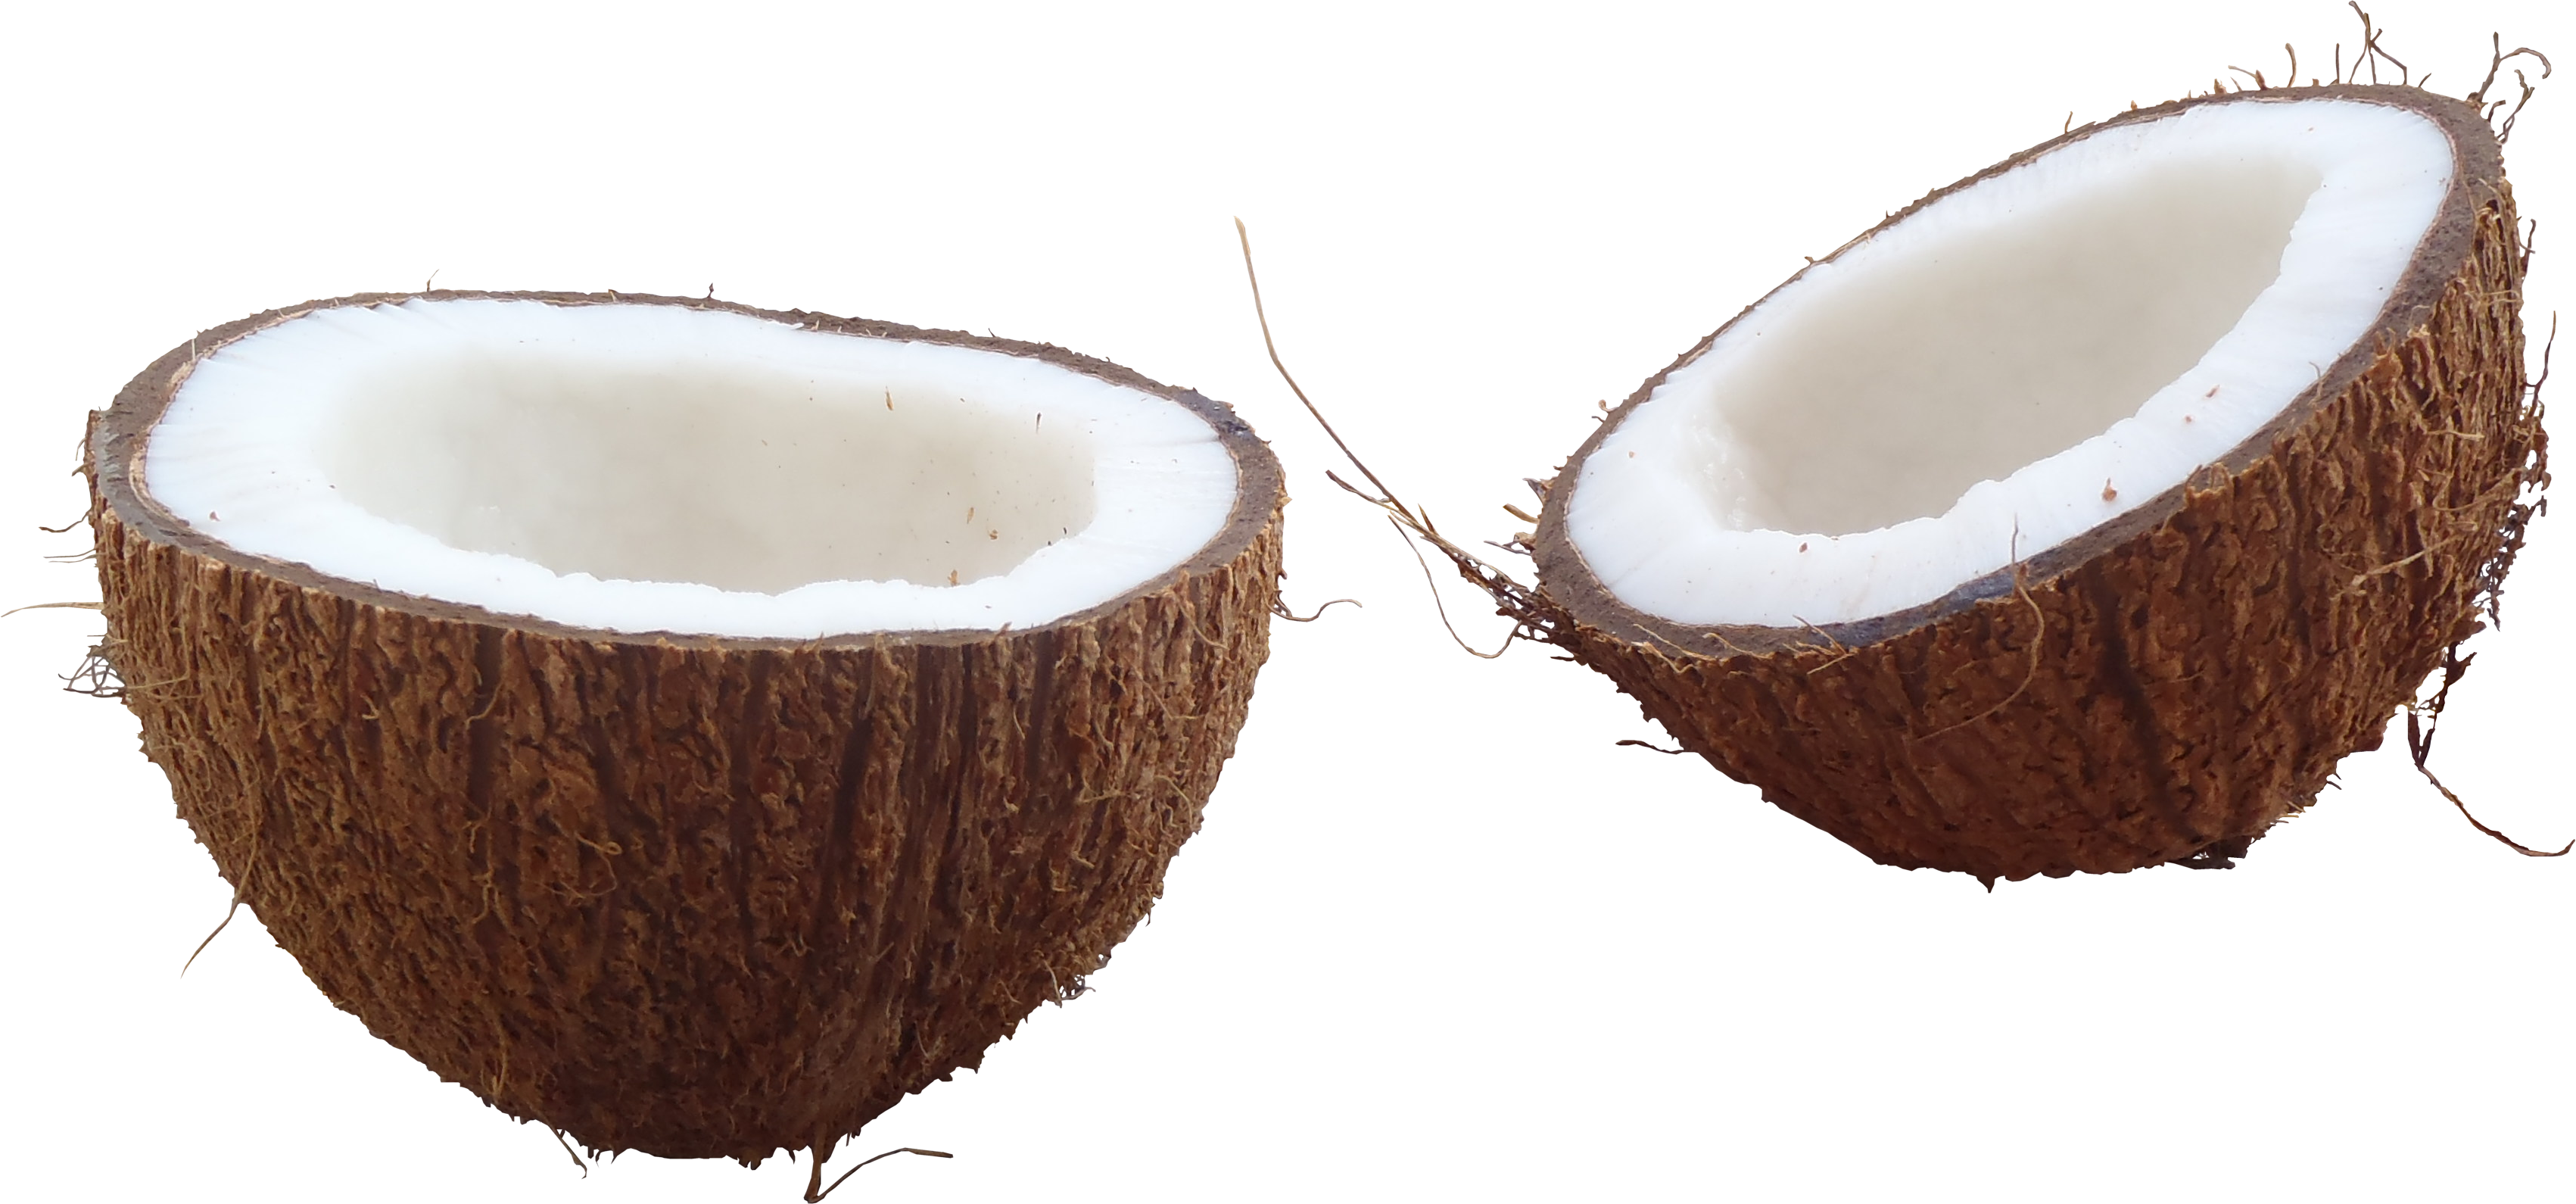 Coconut PNG-PlusPNG.com-1249